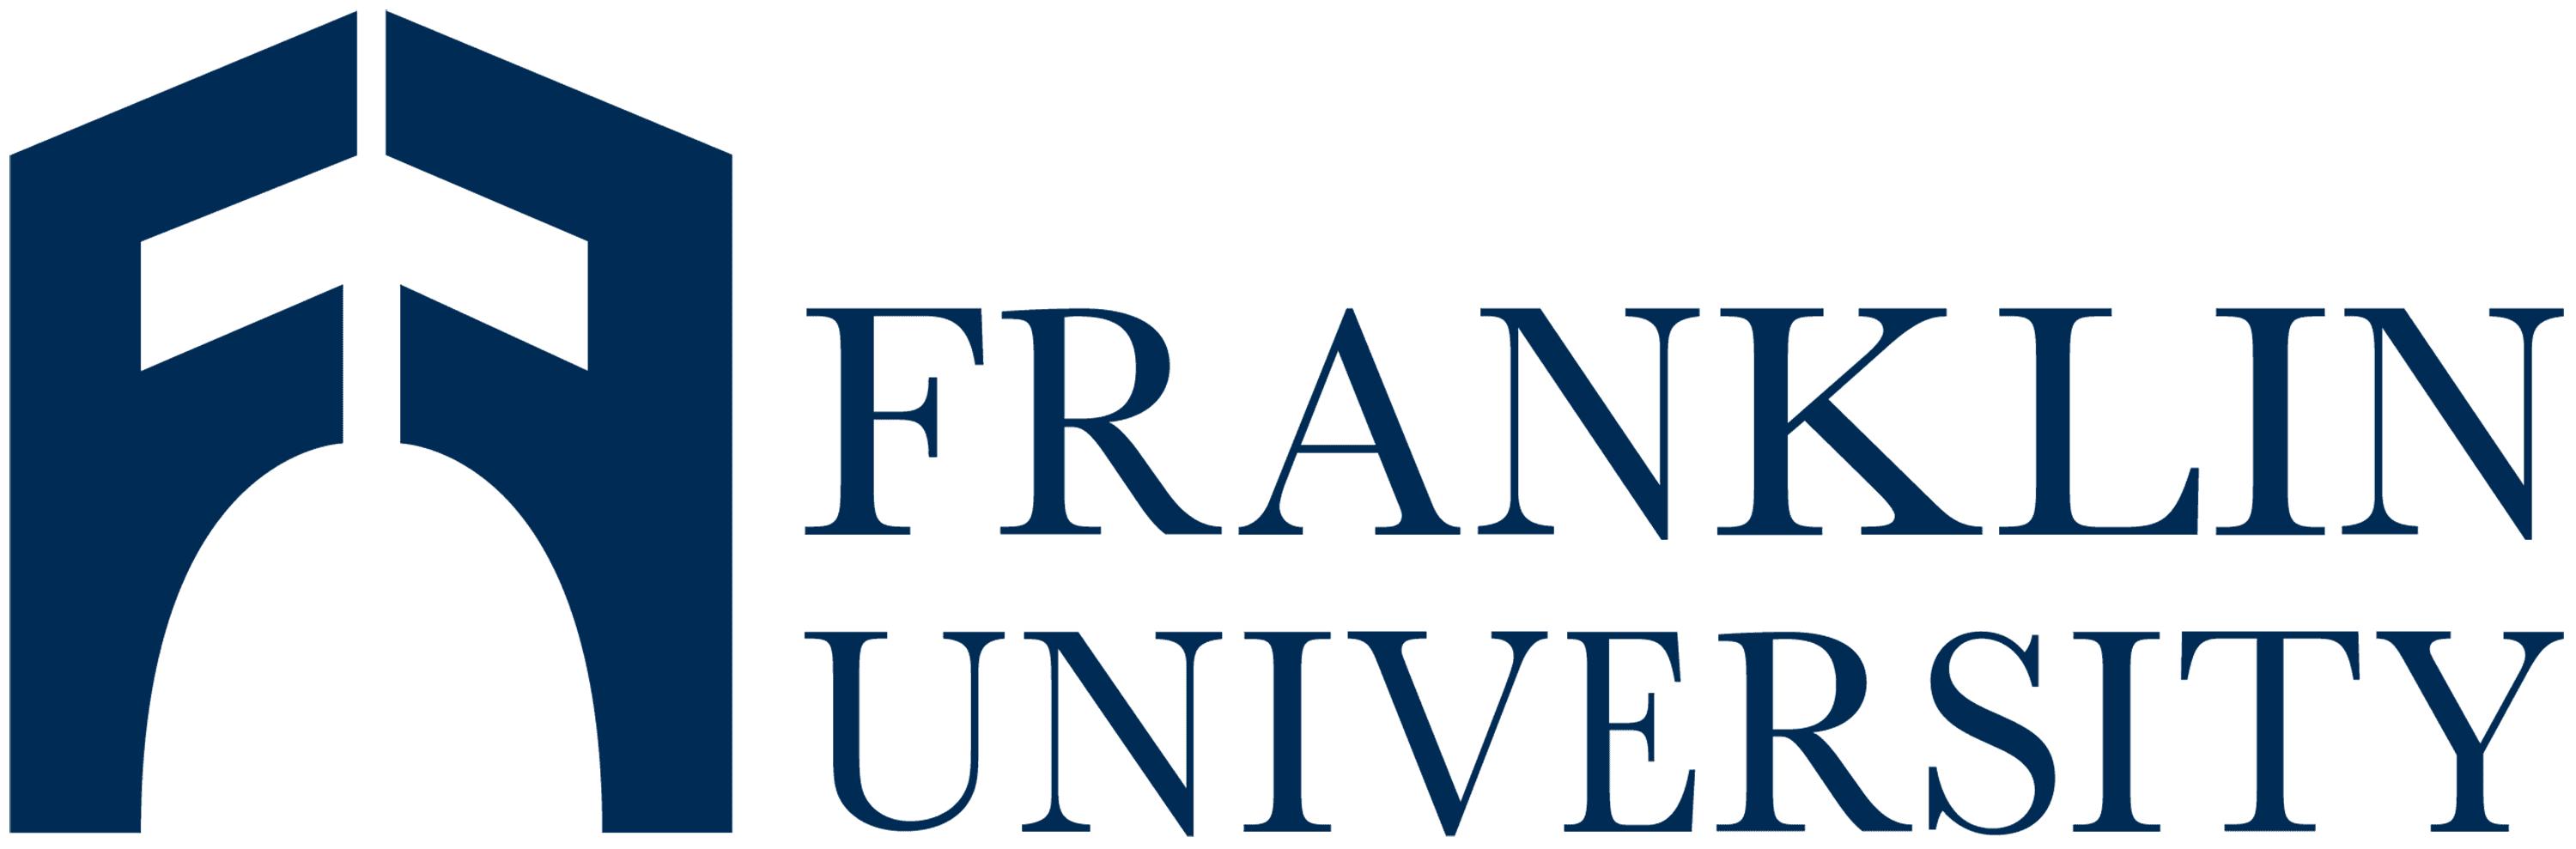 Franklin university seeklogo